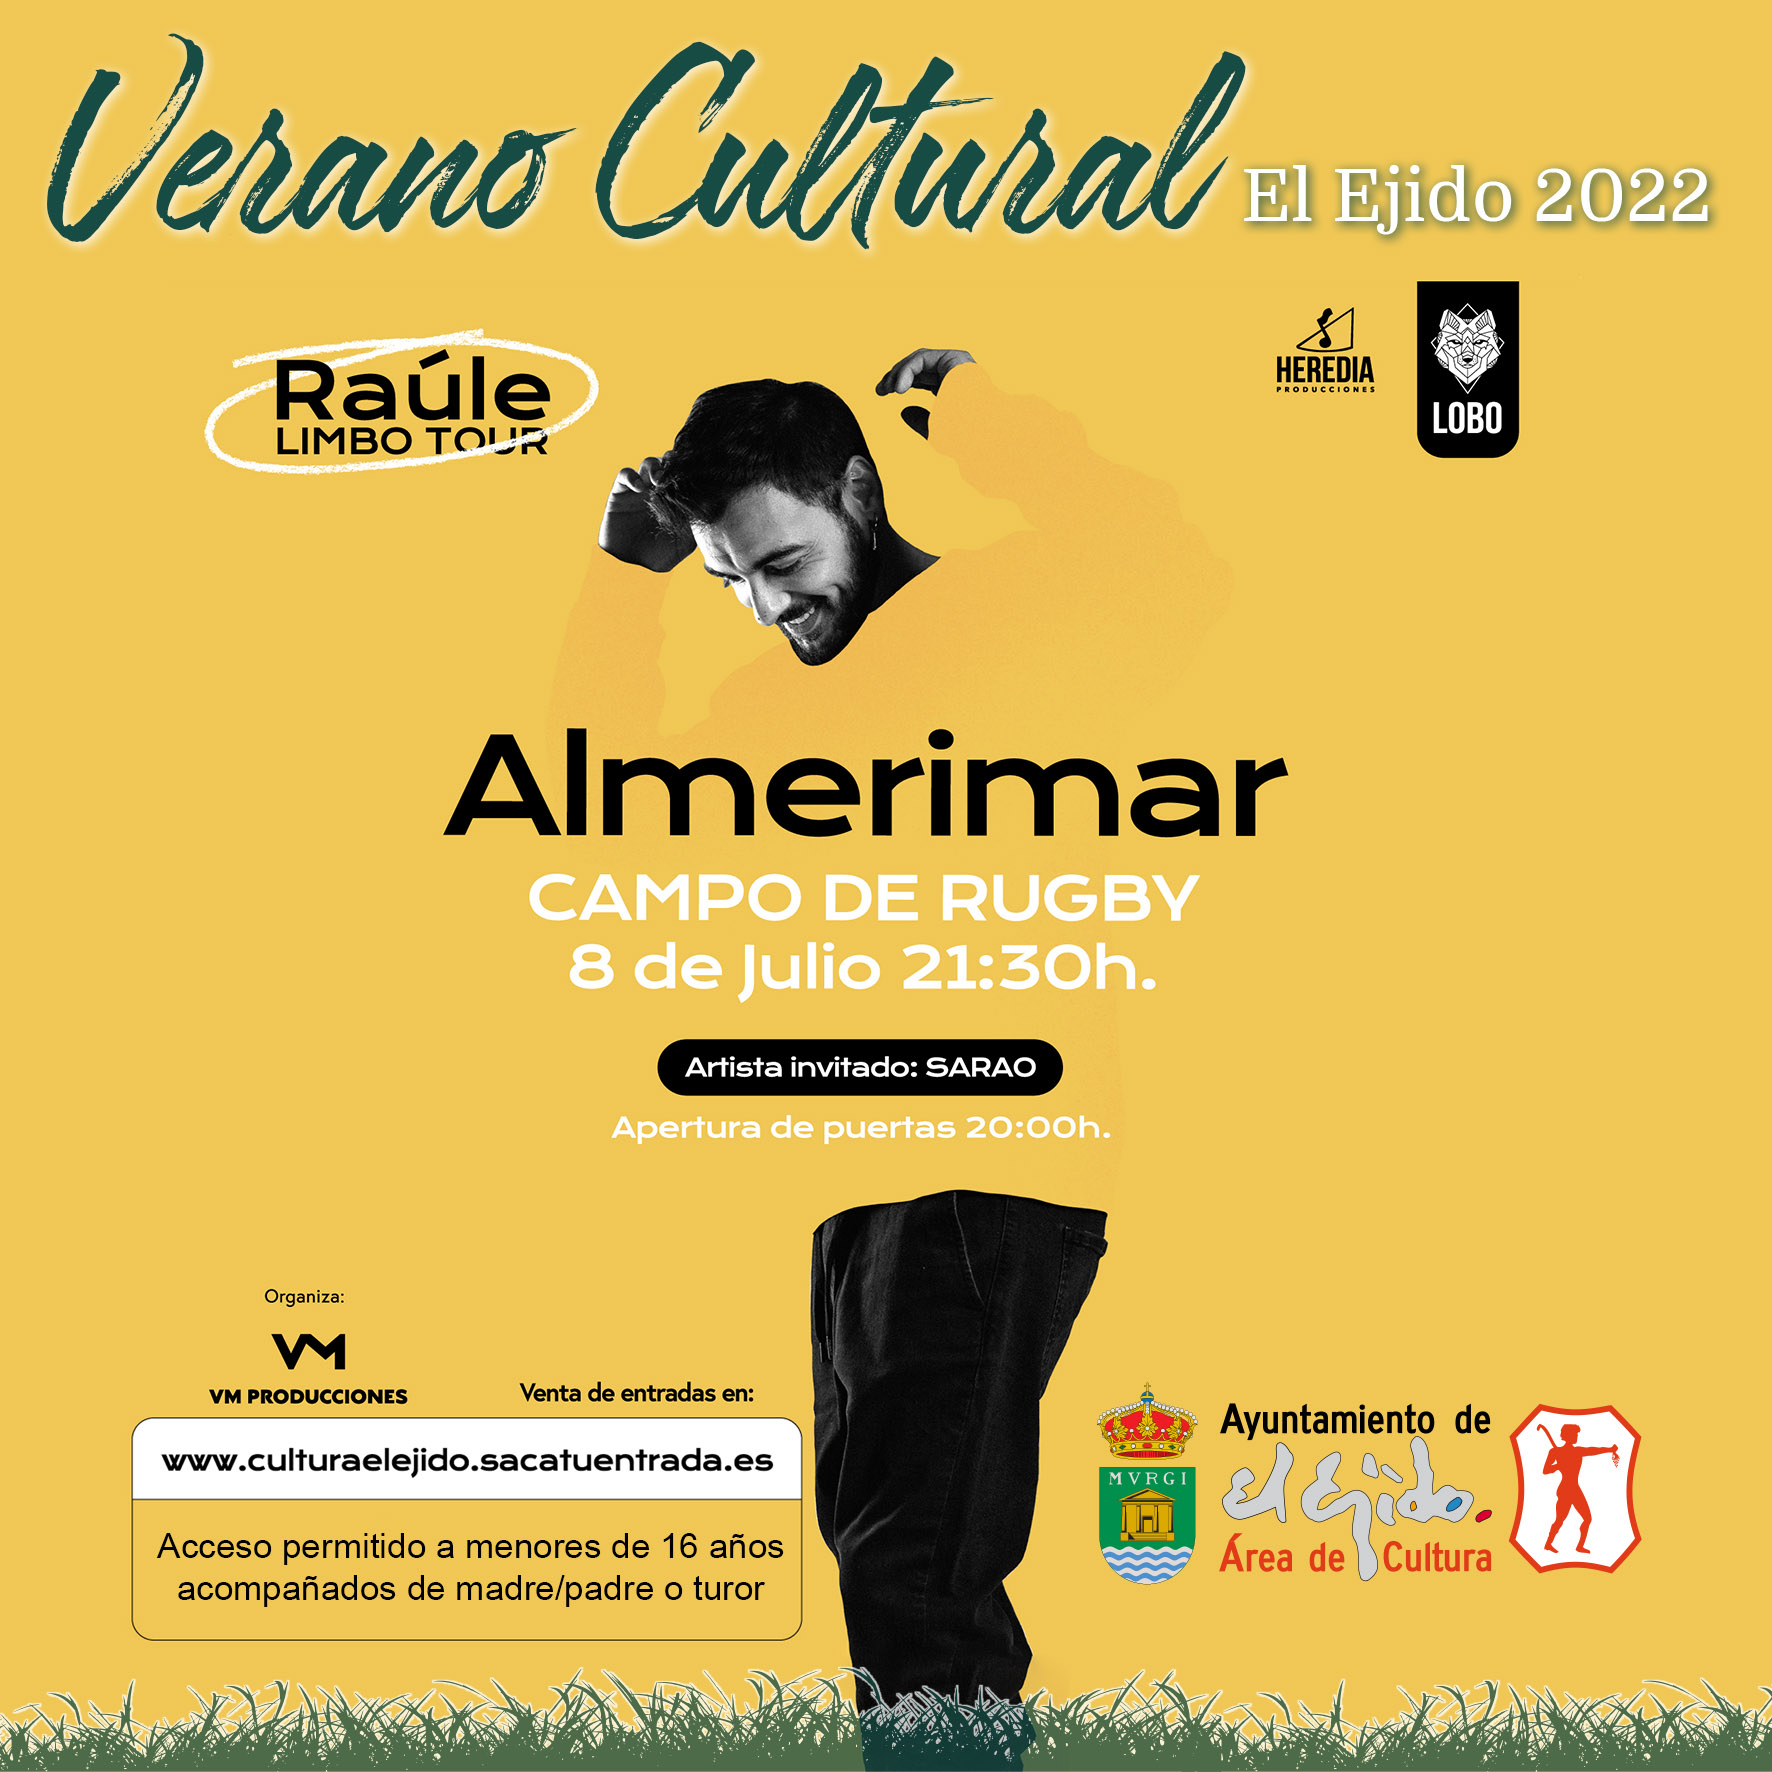 Verano Cultural 2022 de El Ejido – Raúle «Limbo tour»